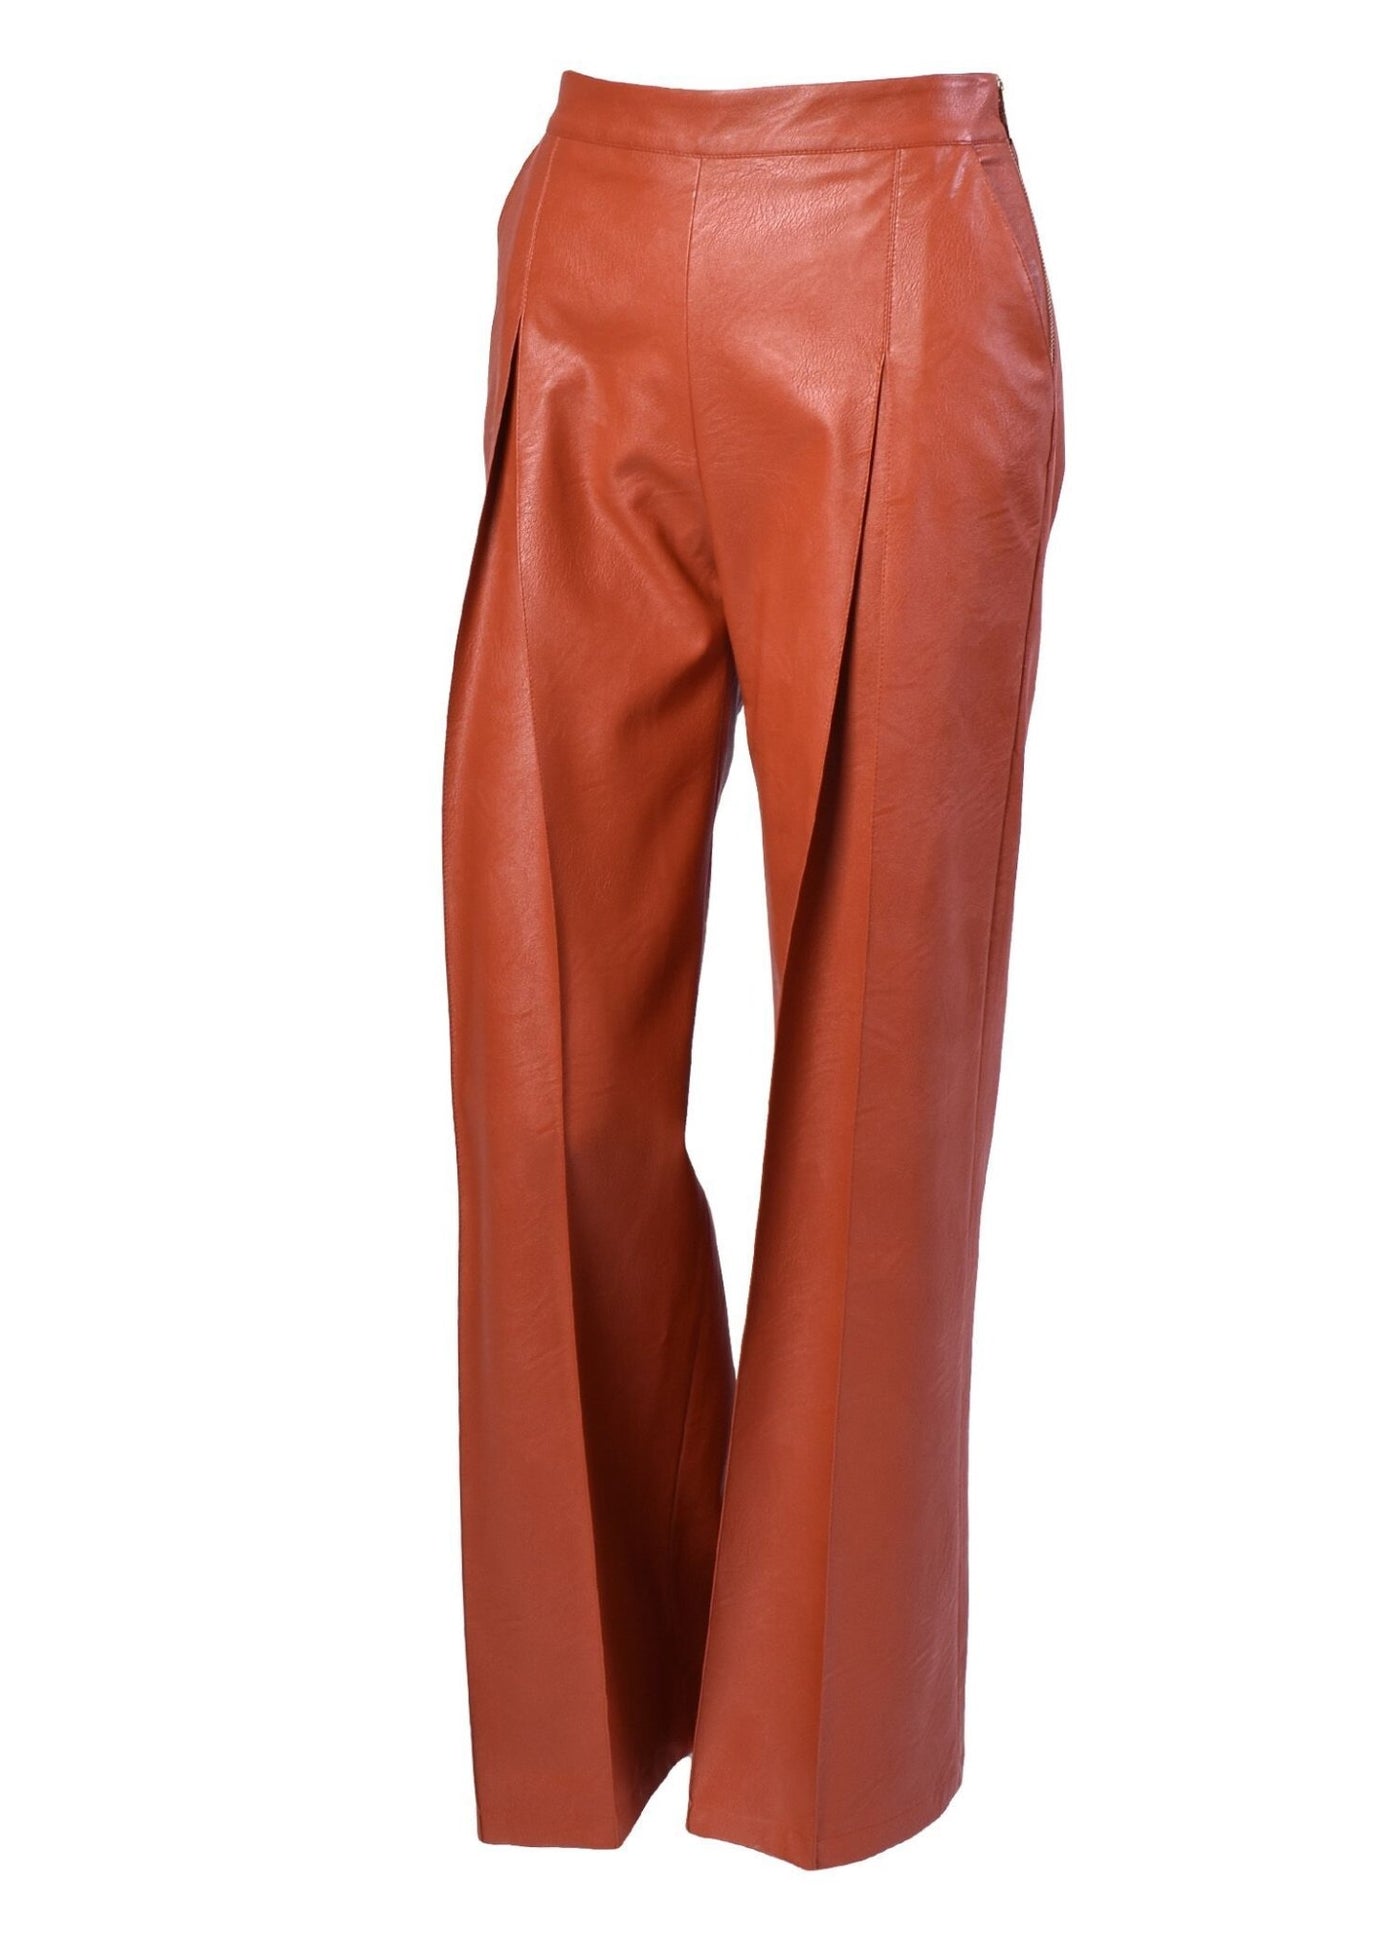 Napa Large Pants - The Clothing LoungeNOPIN